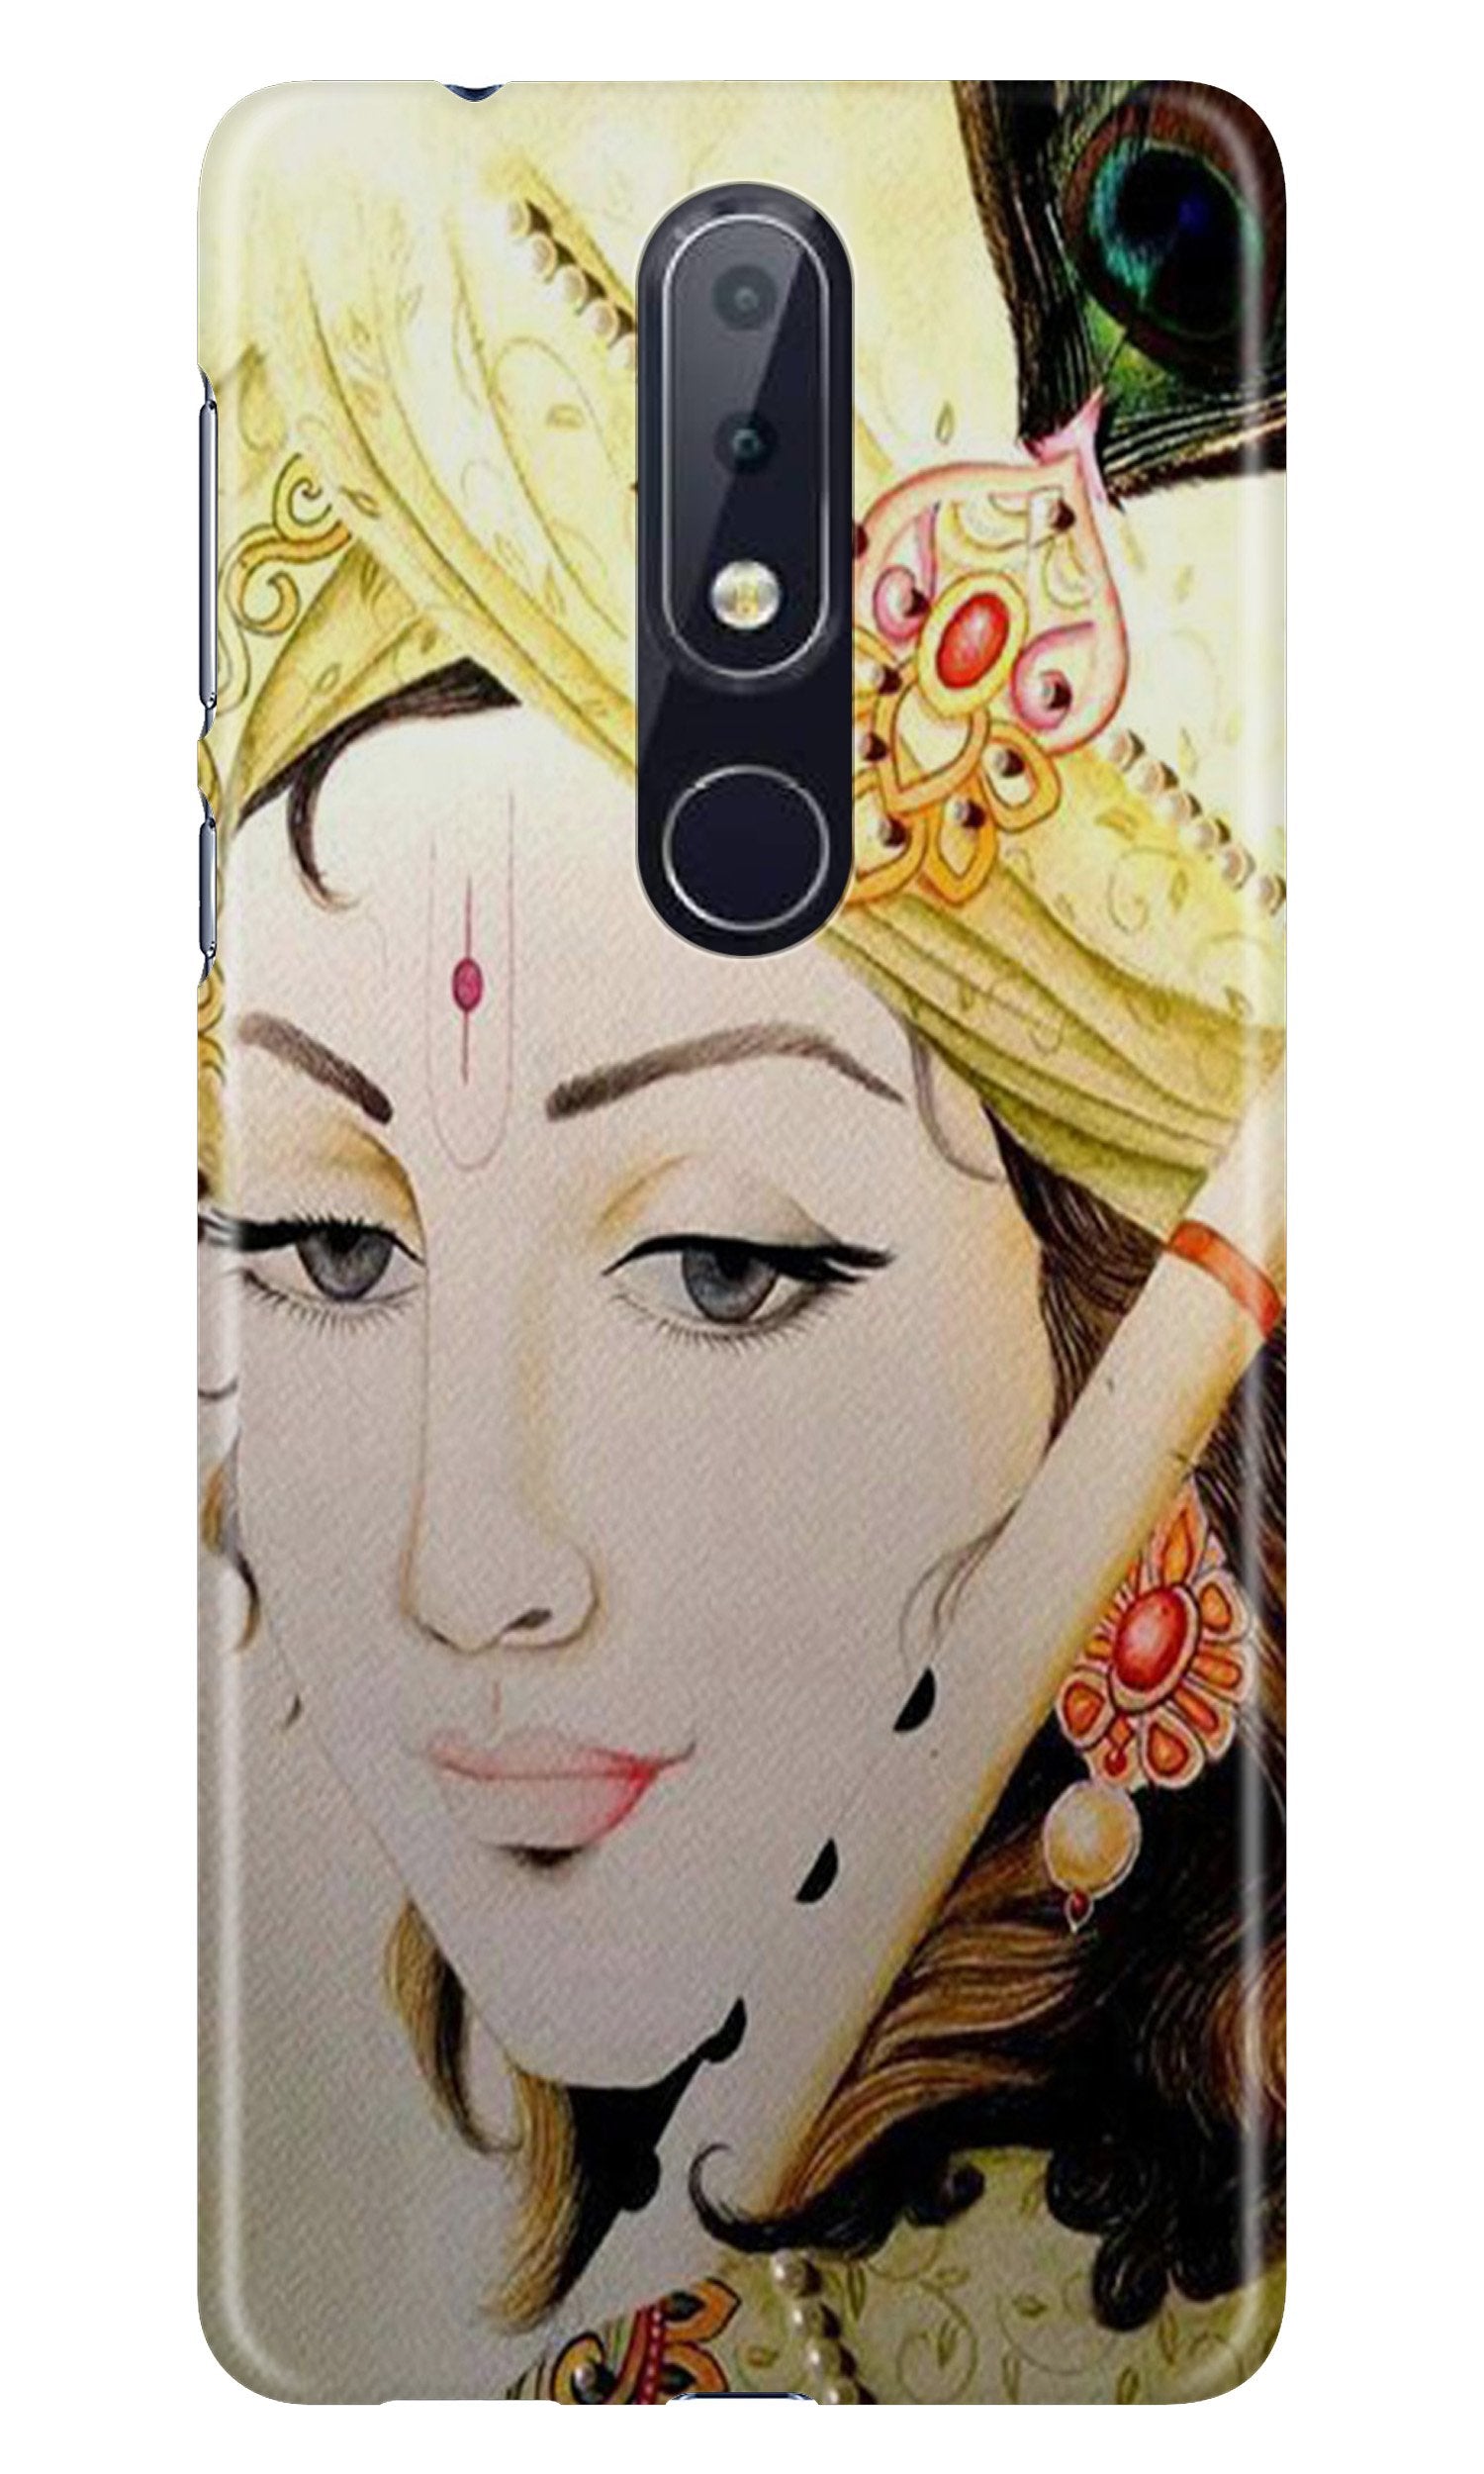 Krishna Case for Nokia 4.2 (Design No. 291)